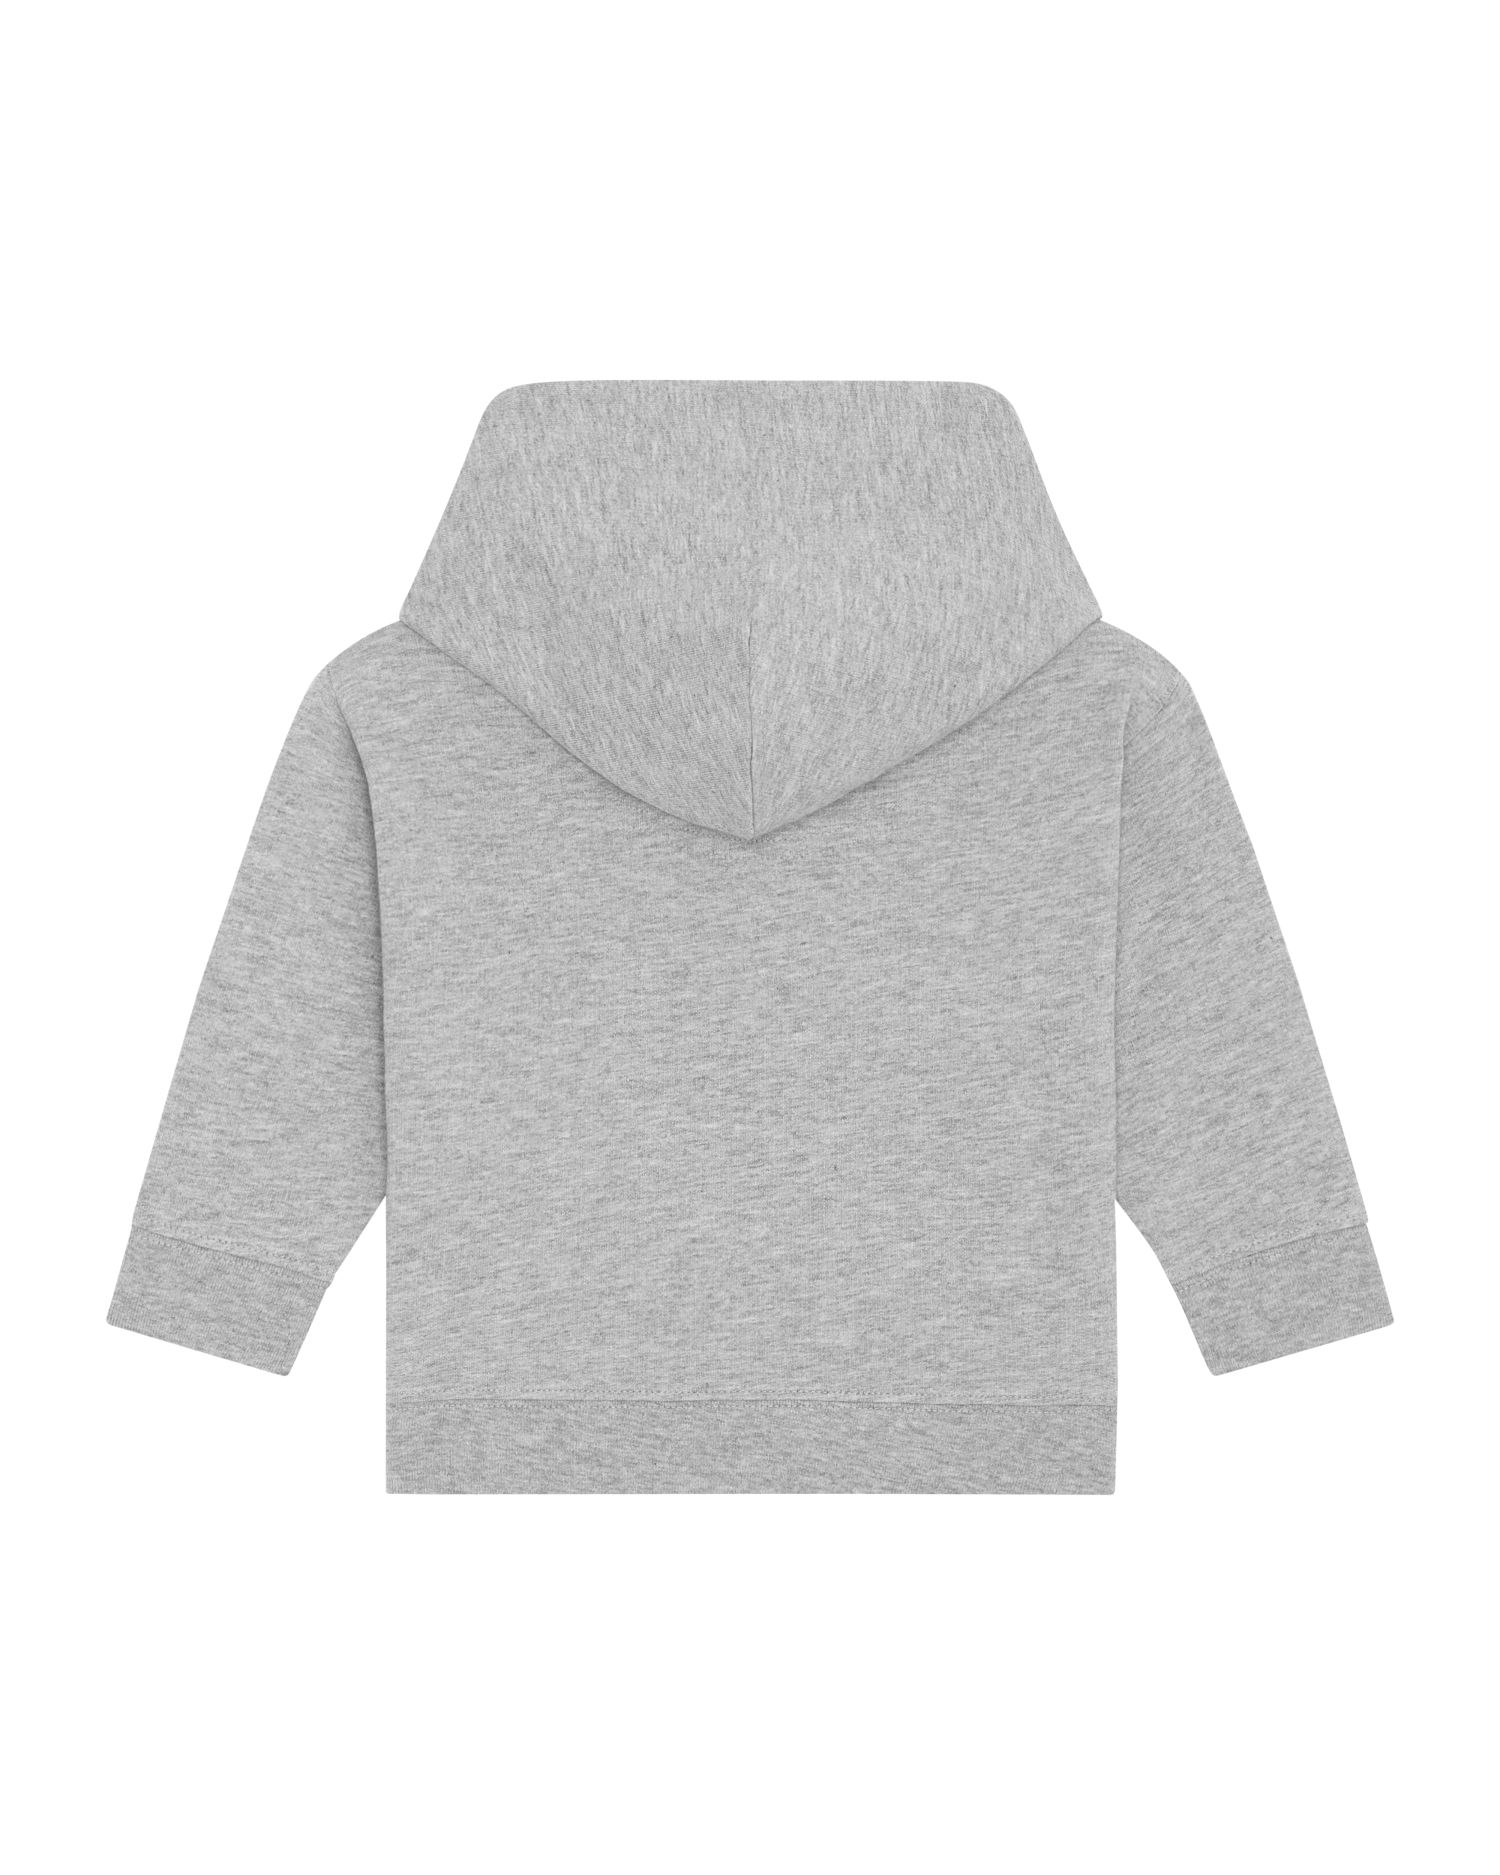 Hoodie sweatshirts Baby Cruiser in Farbe Heather Grey